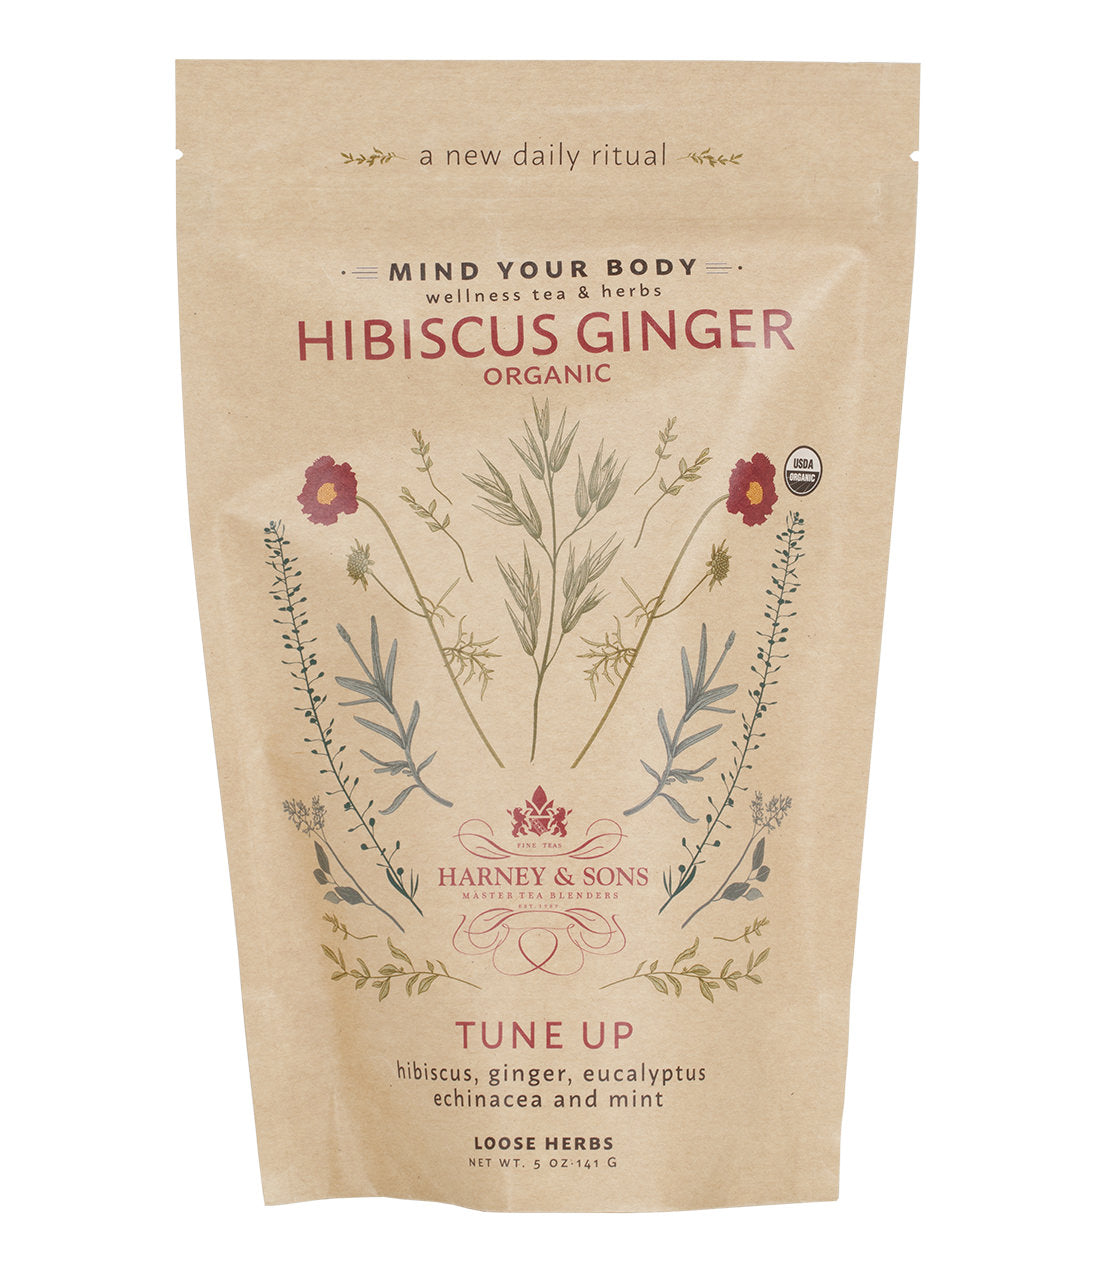 Organic Hibiscus Ginger -  Tune Up